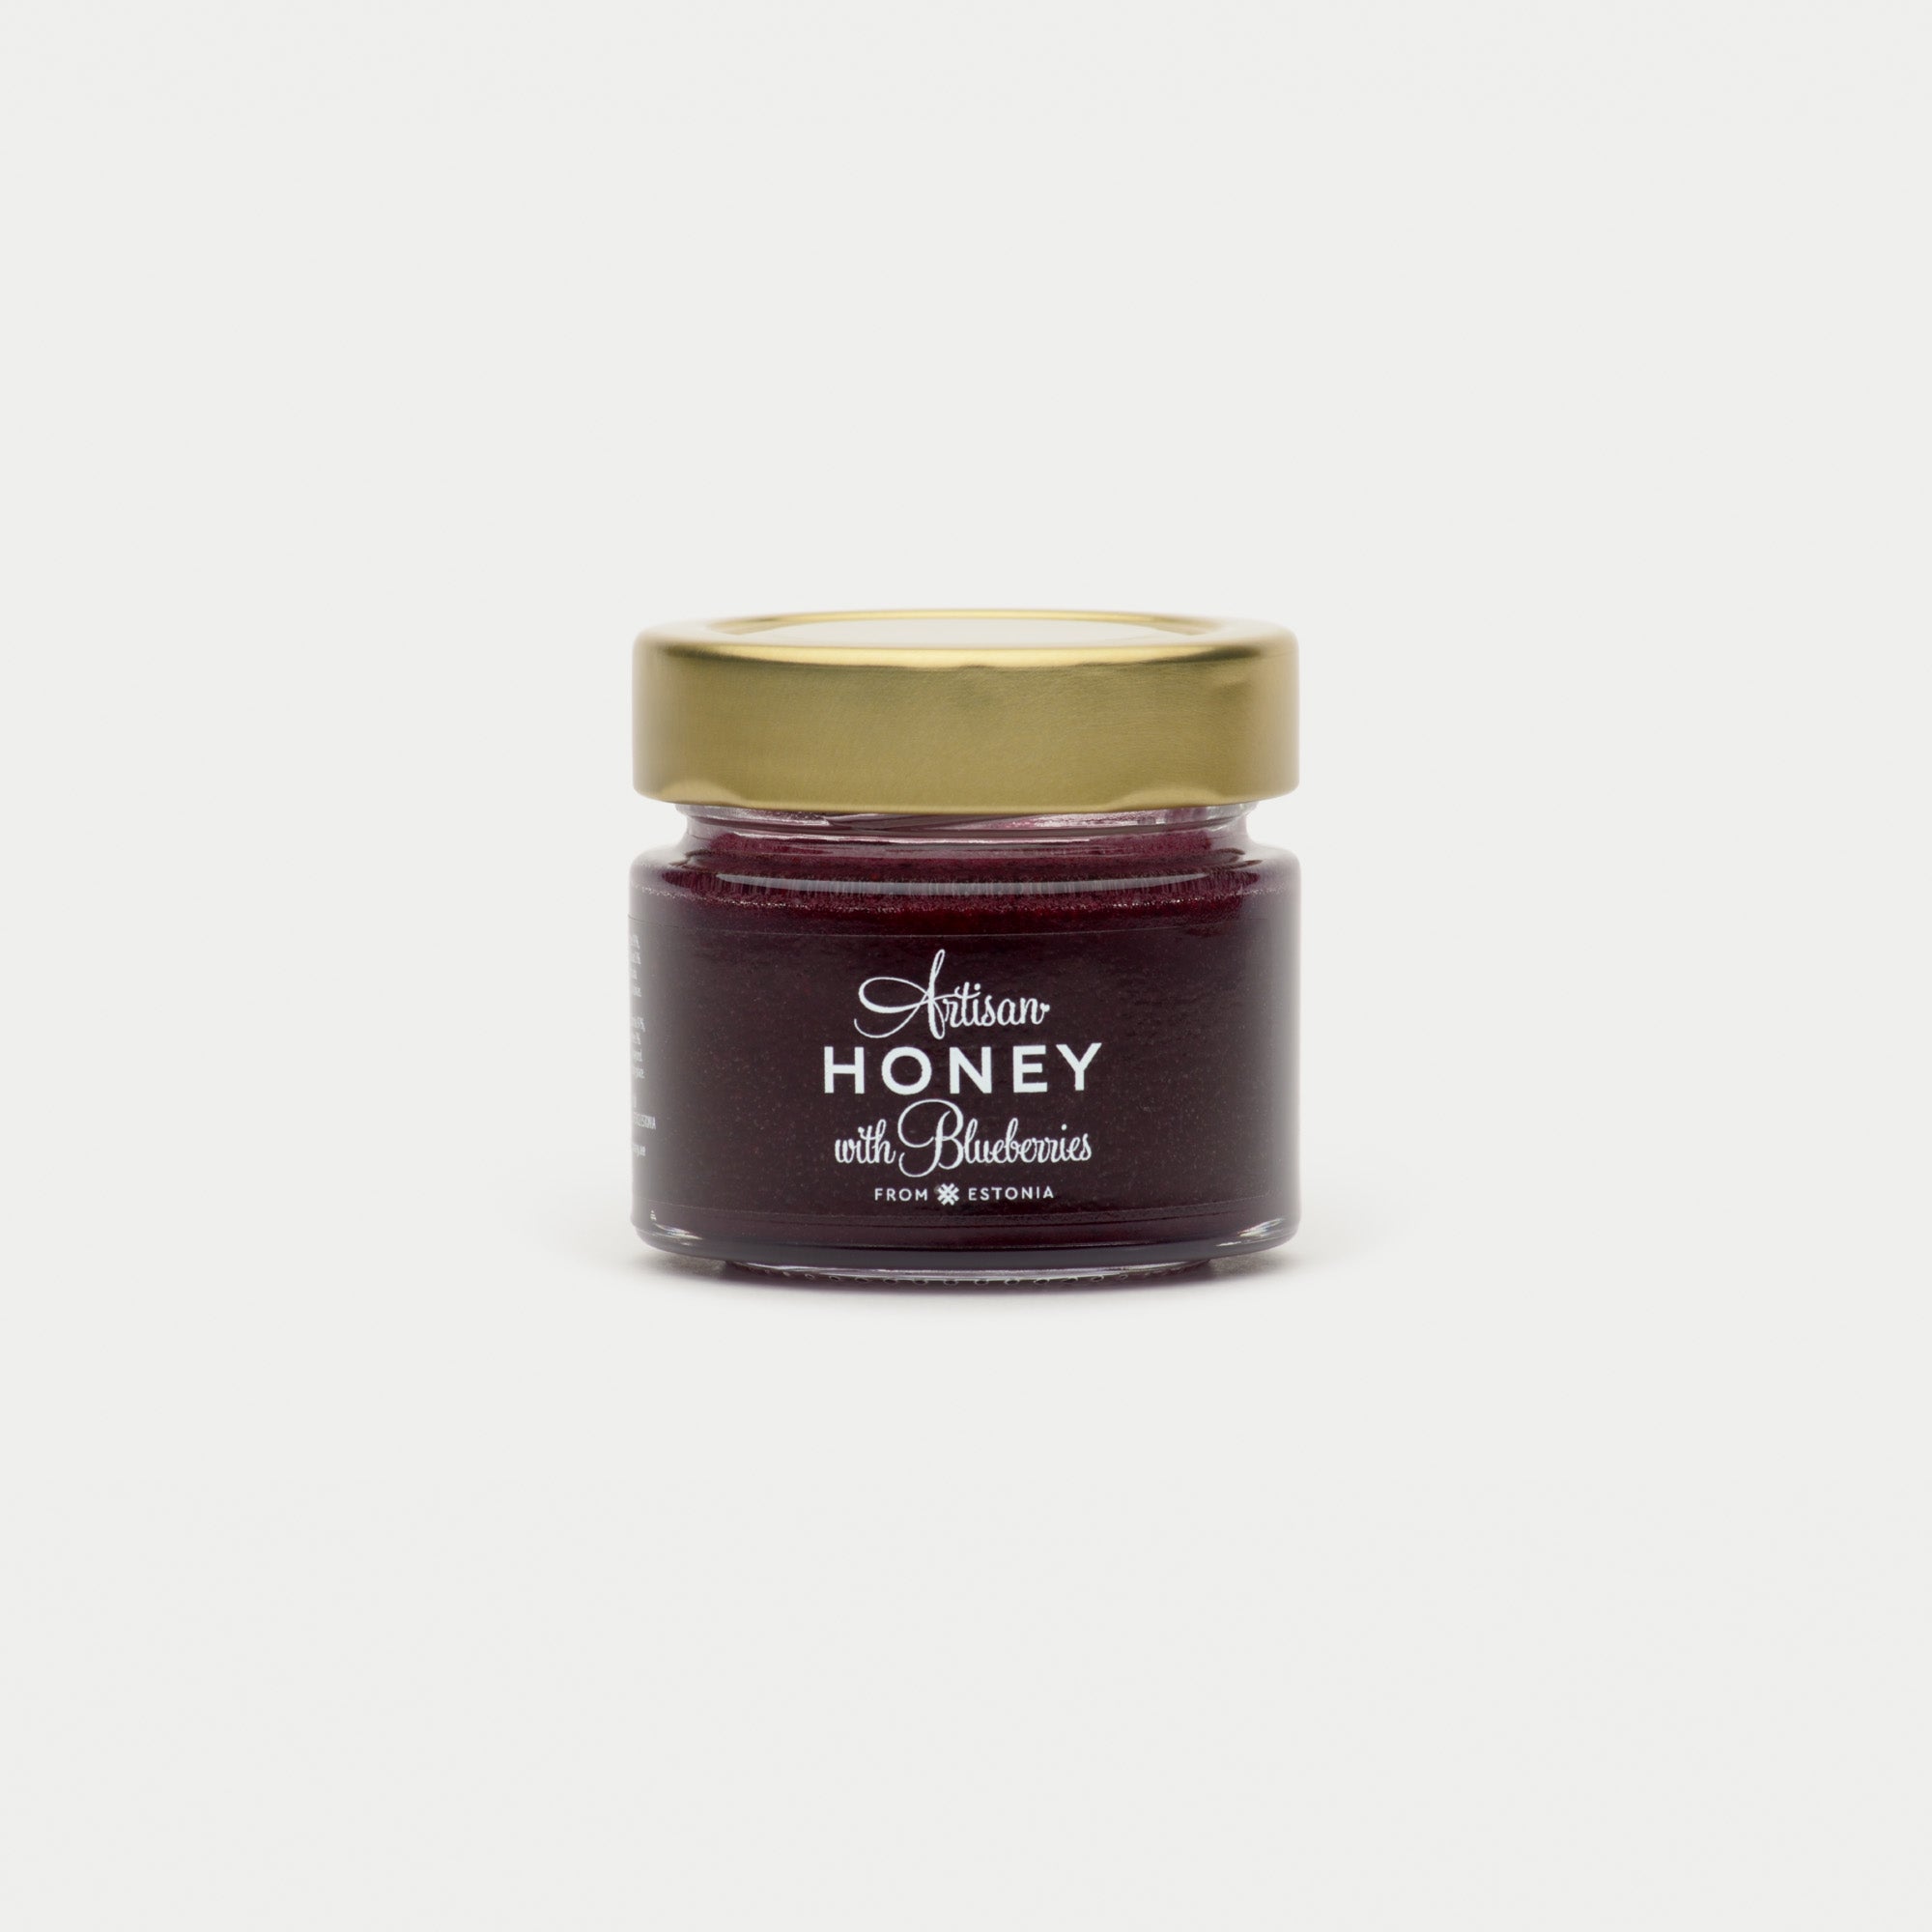 Honey with Bilberries (100g)